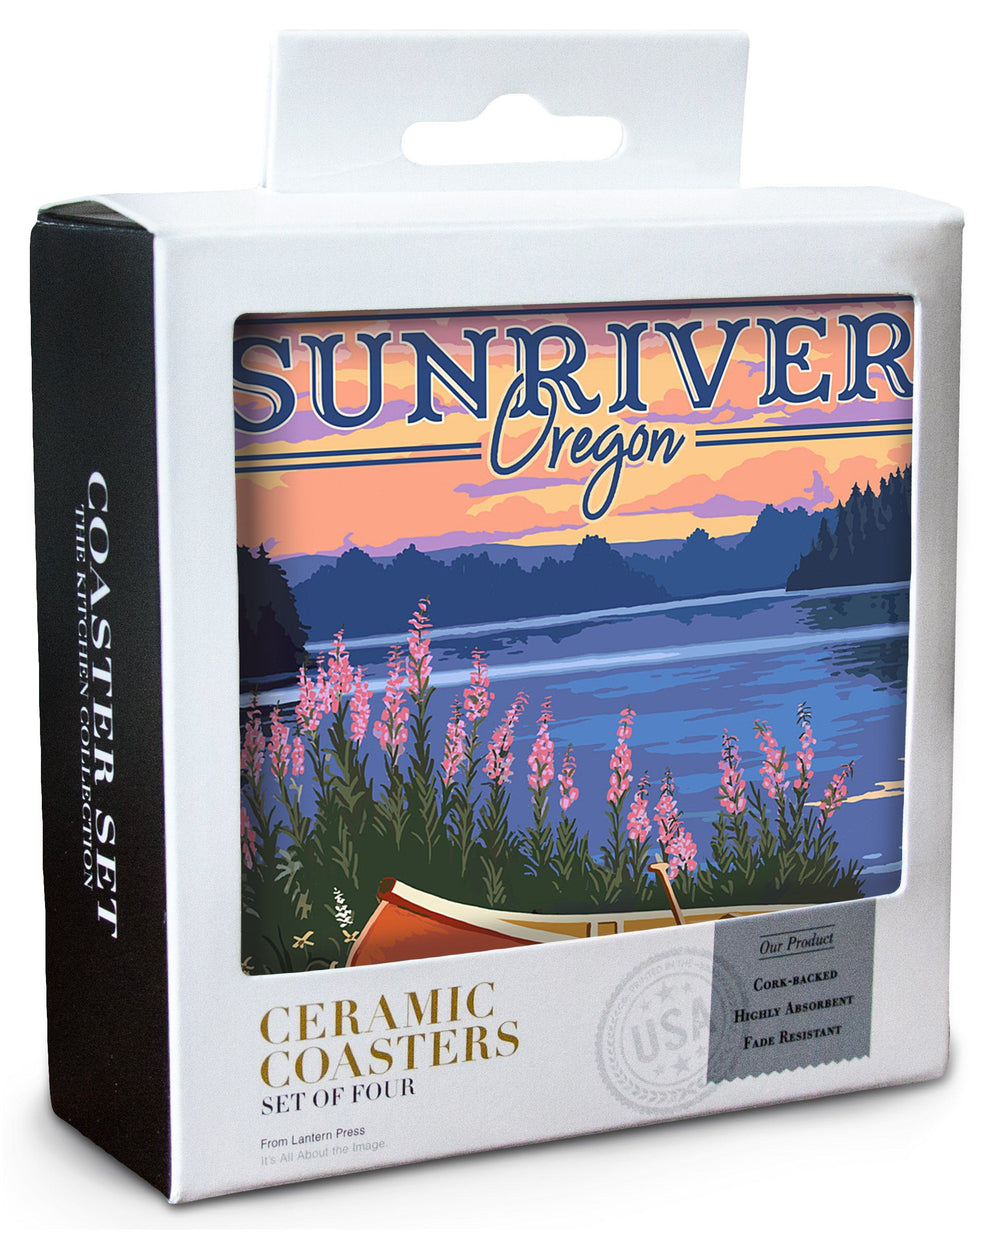 Sunriver, Oregon, Canoe & Lake, Lantern Press Artwork, Coaster Set Coasters Lantern Press 